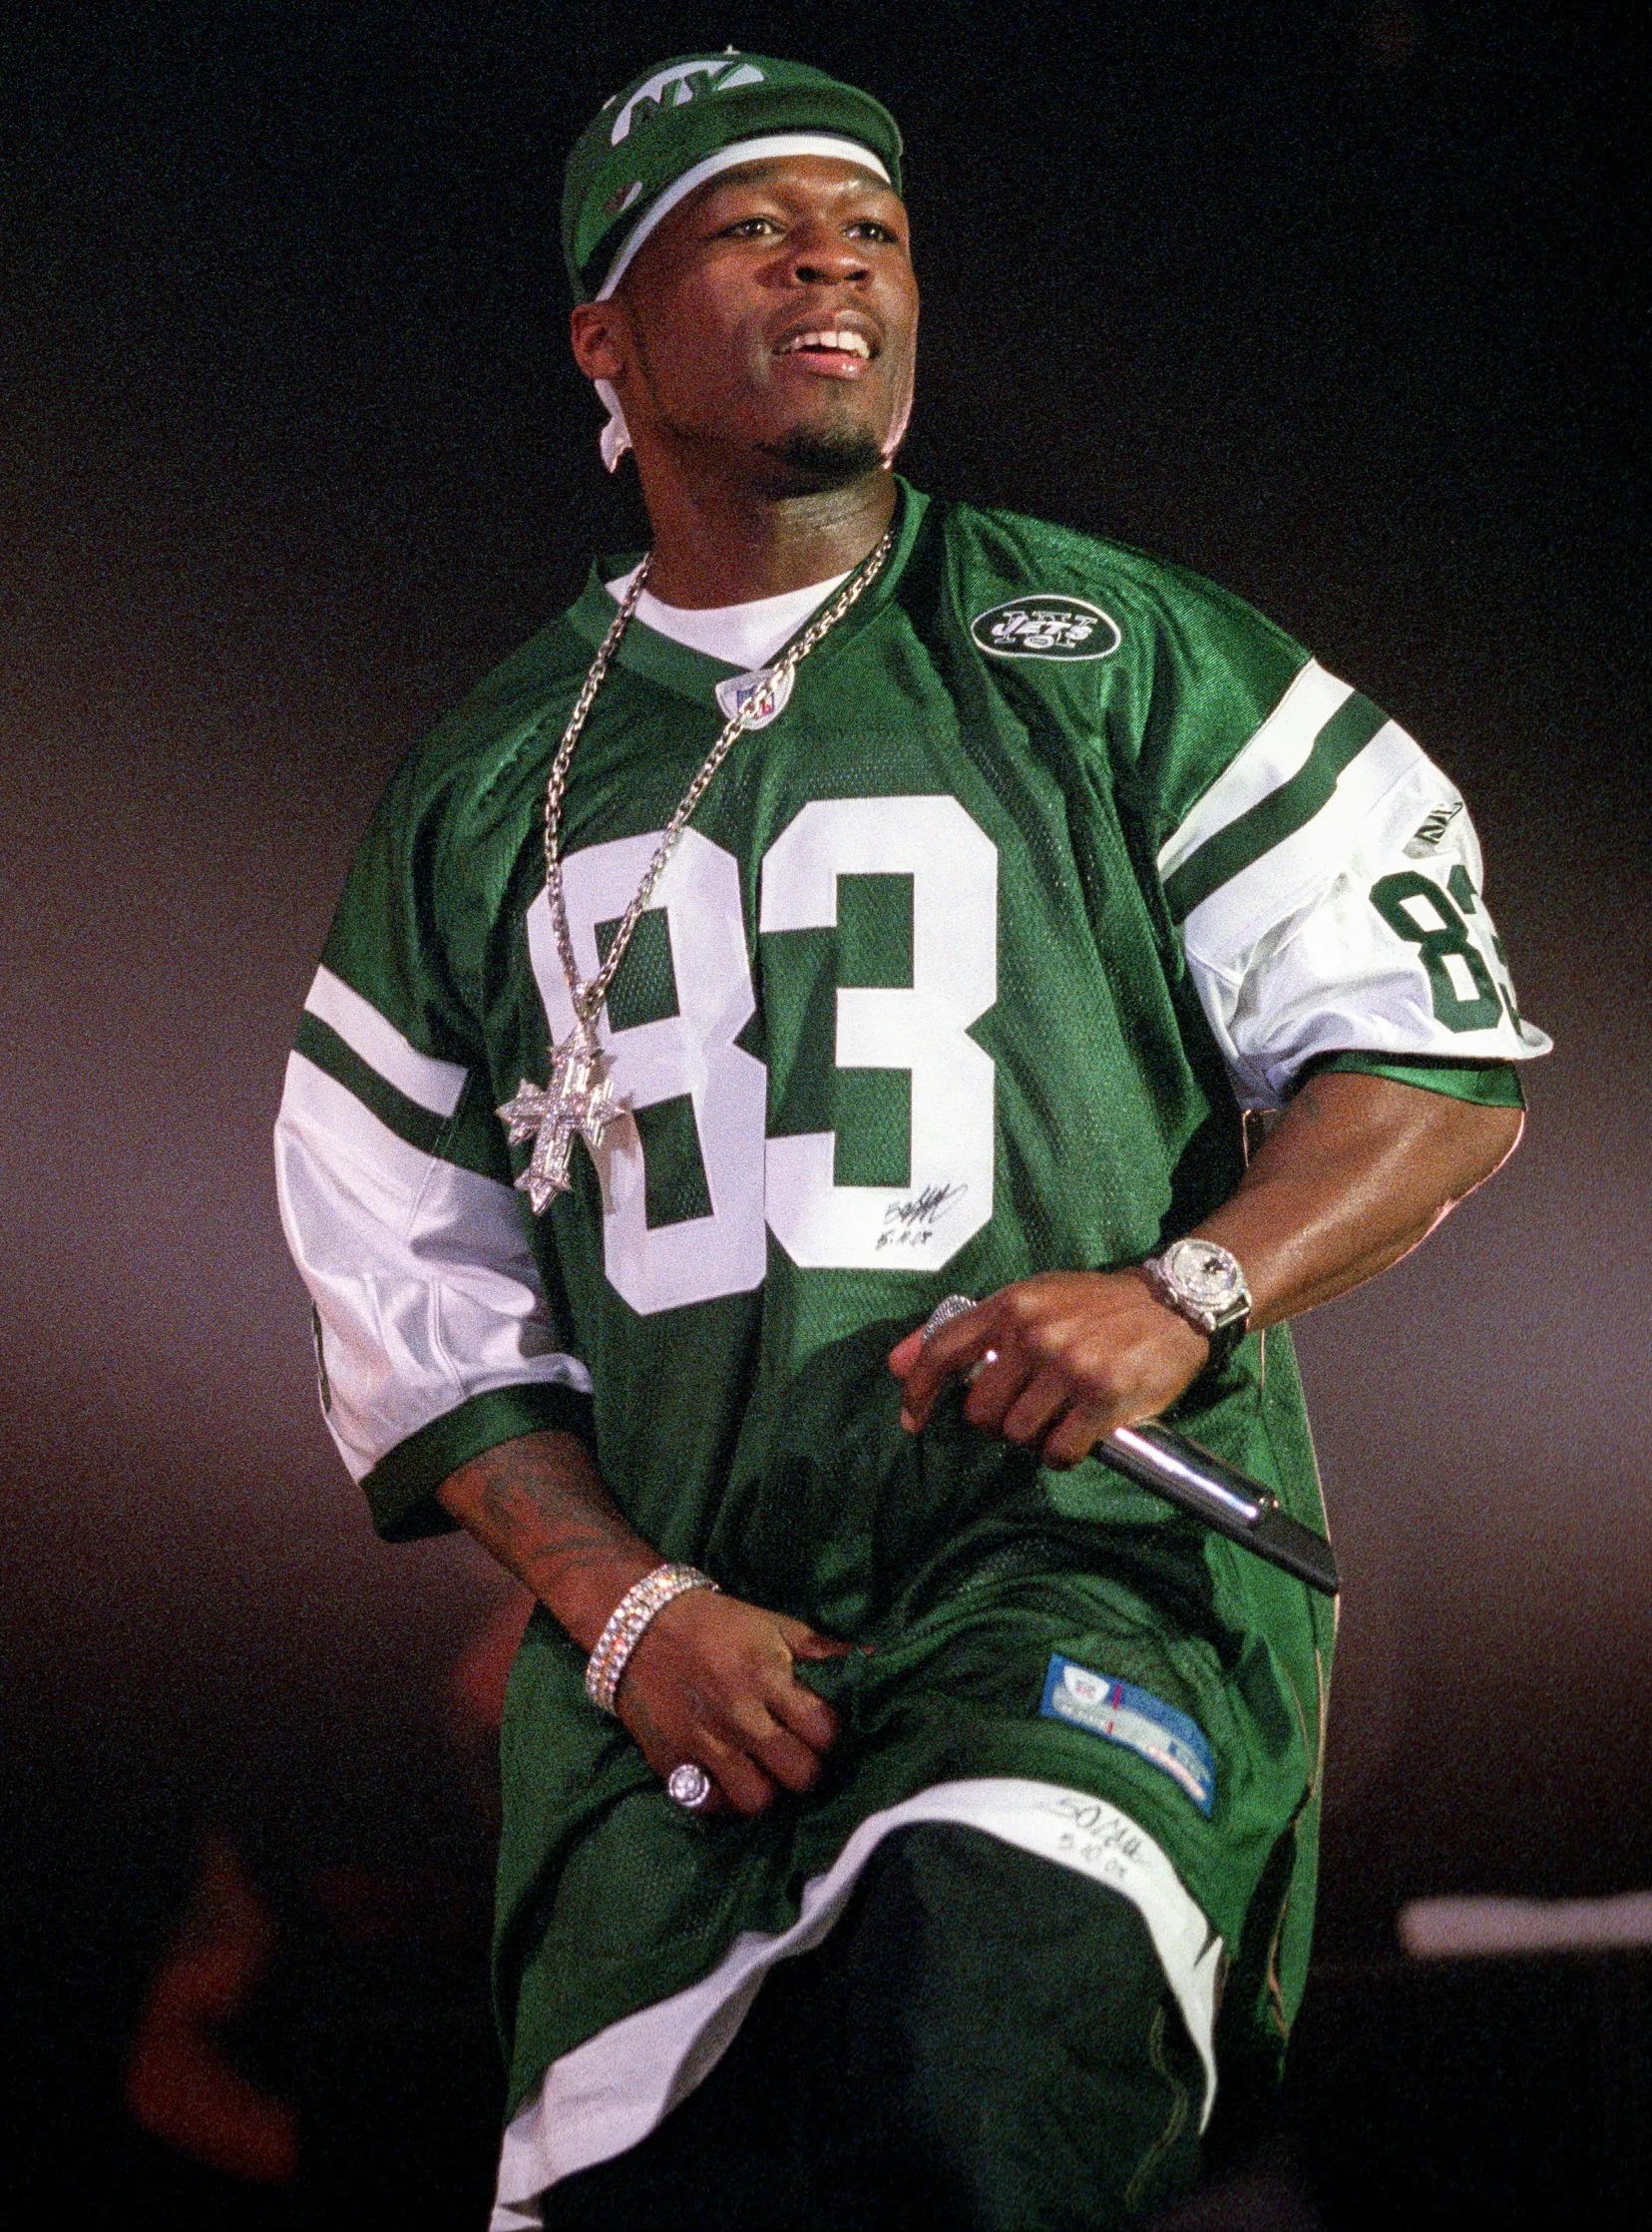 50 Cent – aka Curtis James Jackson III rocks the stage